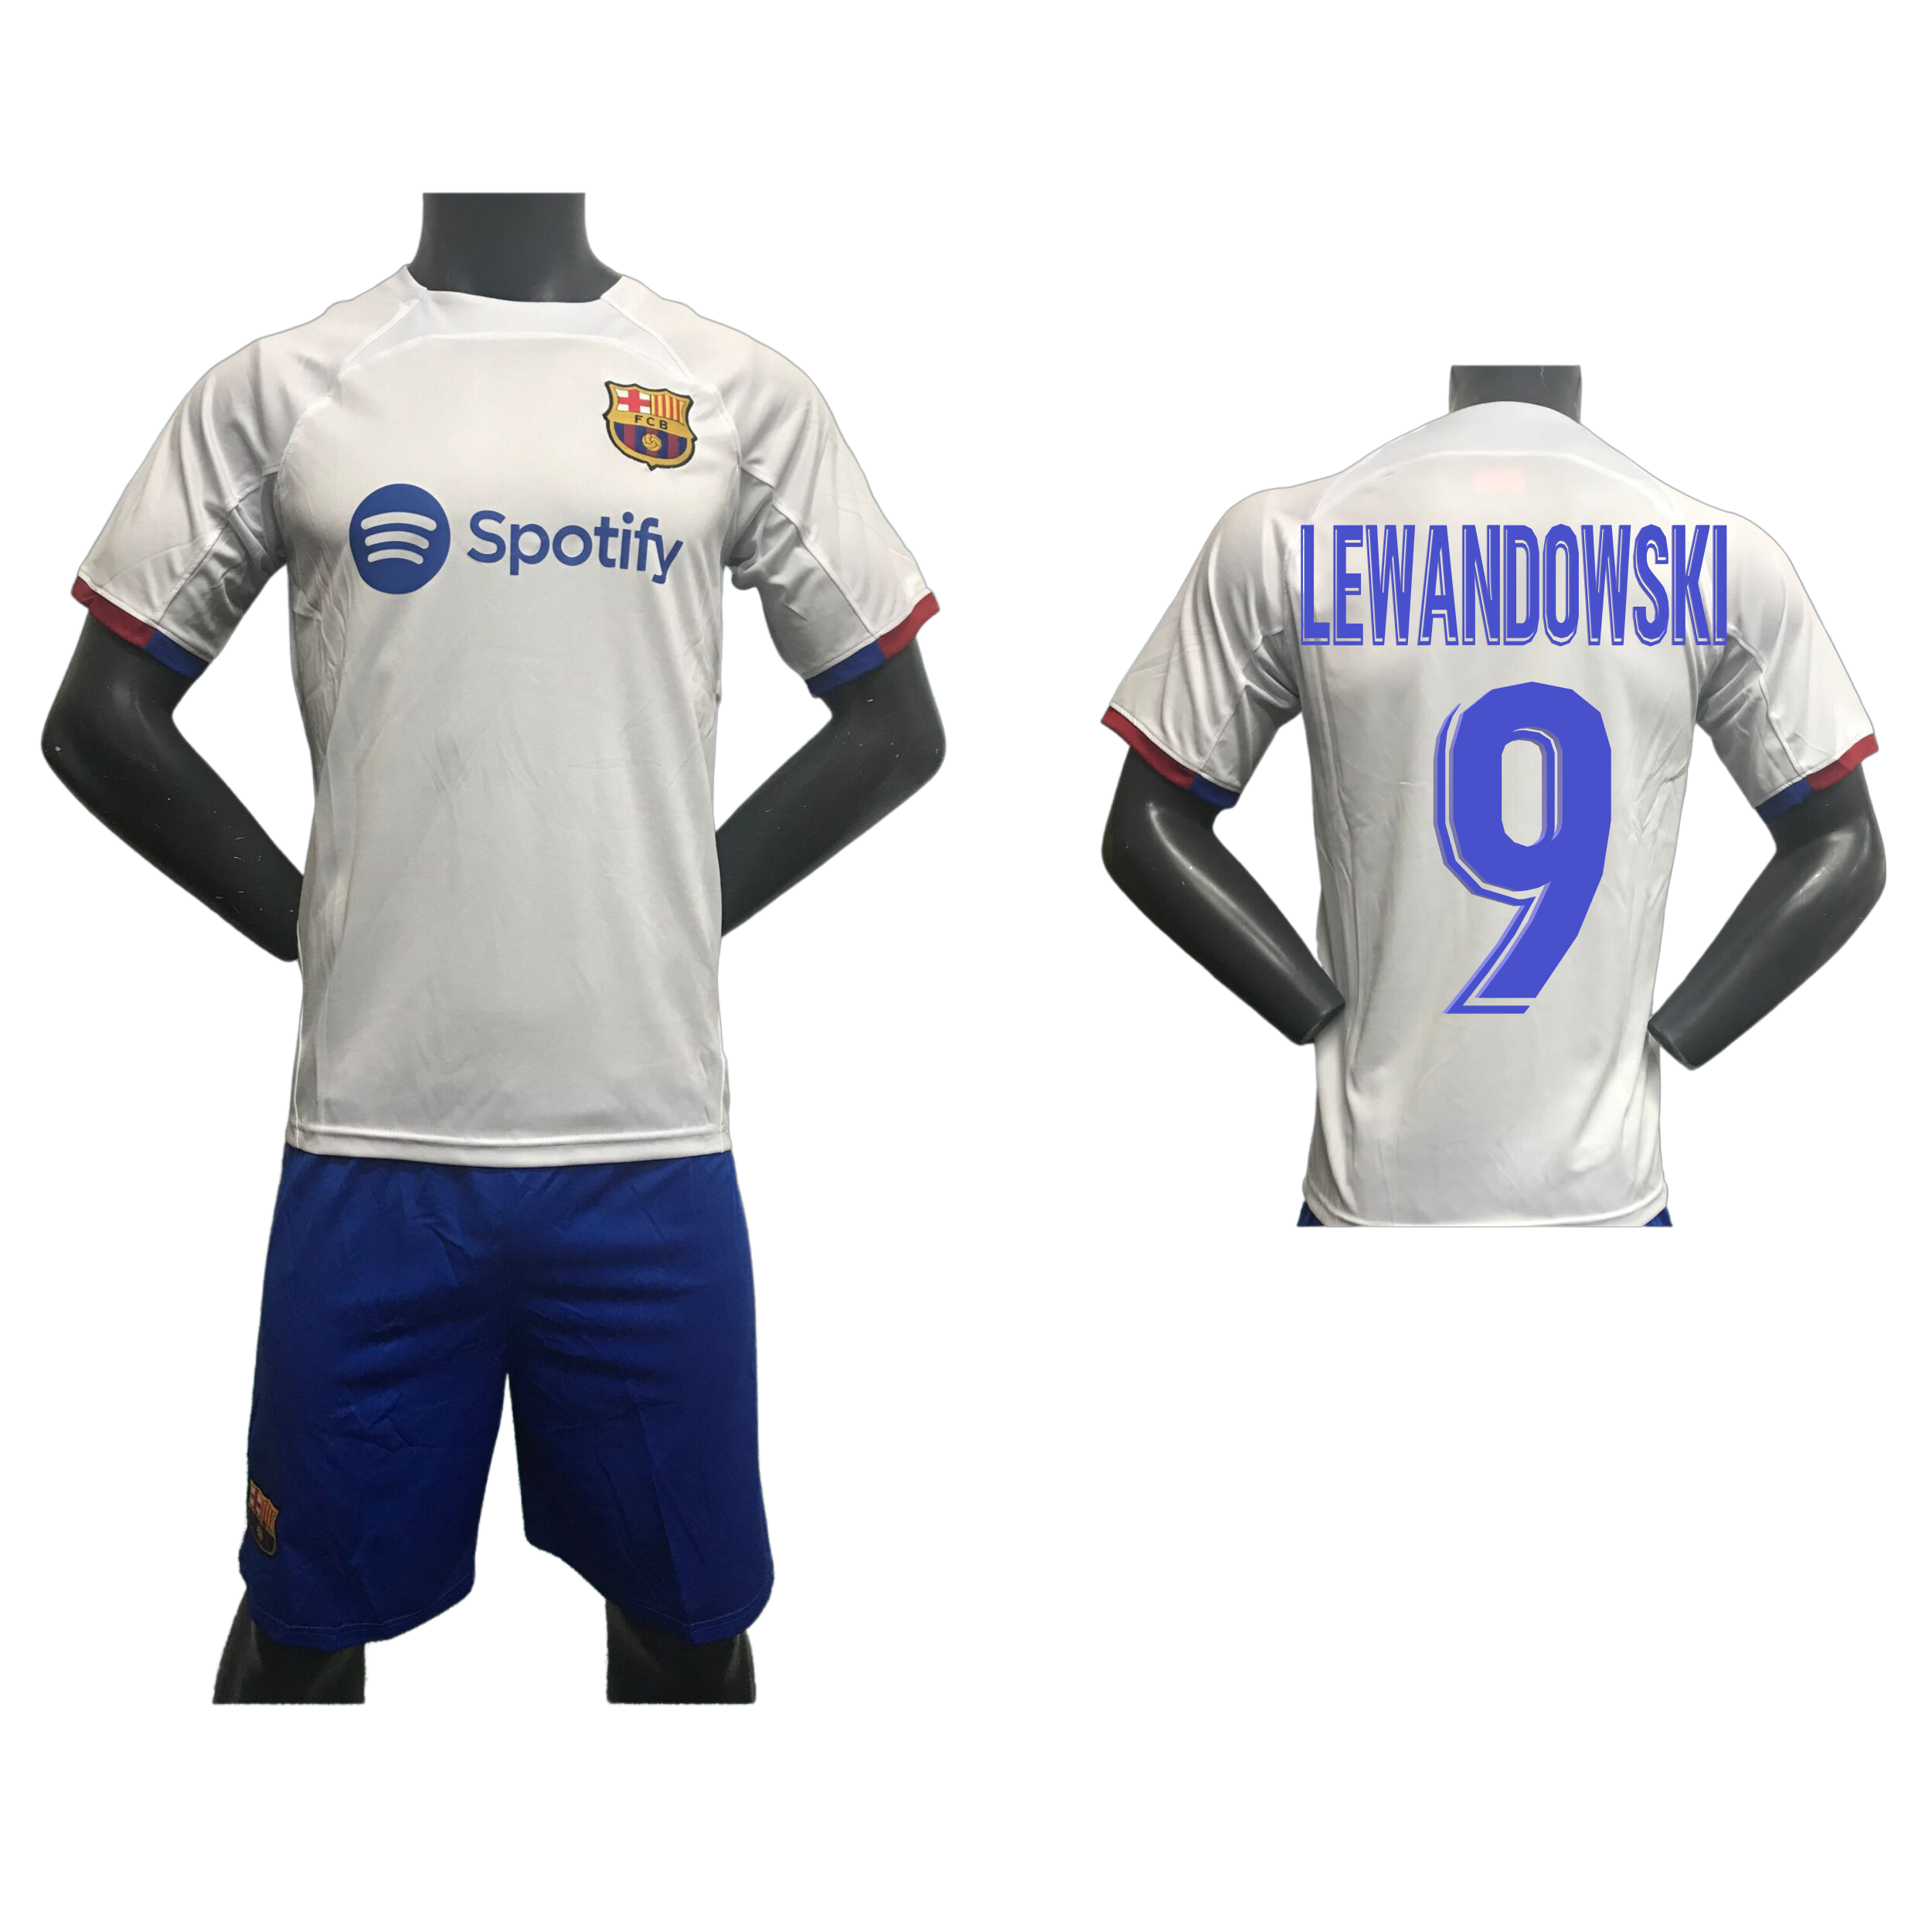 Lewandowski Barca Replica Away Kit - 23/24